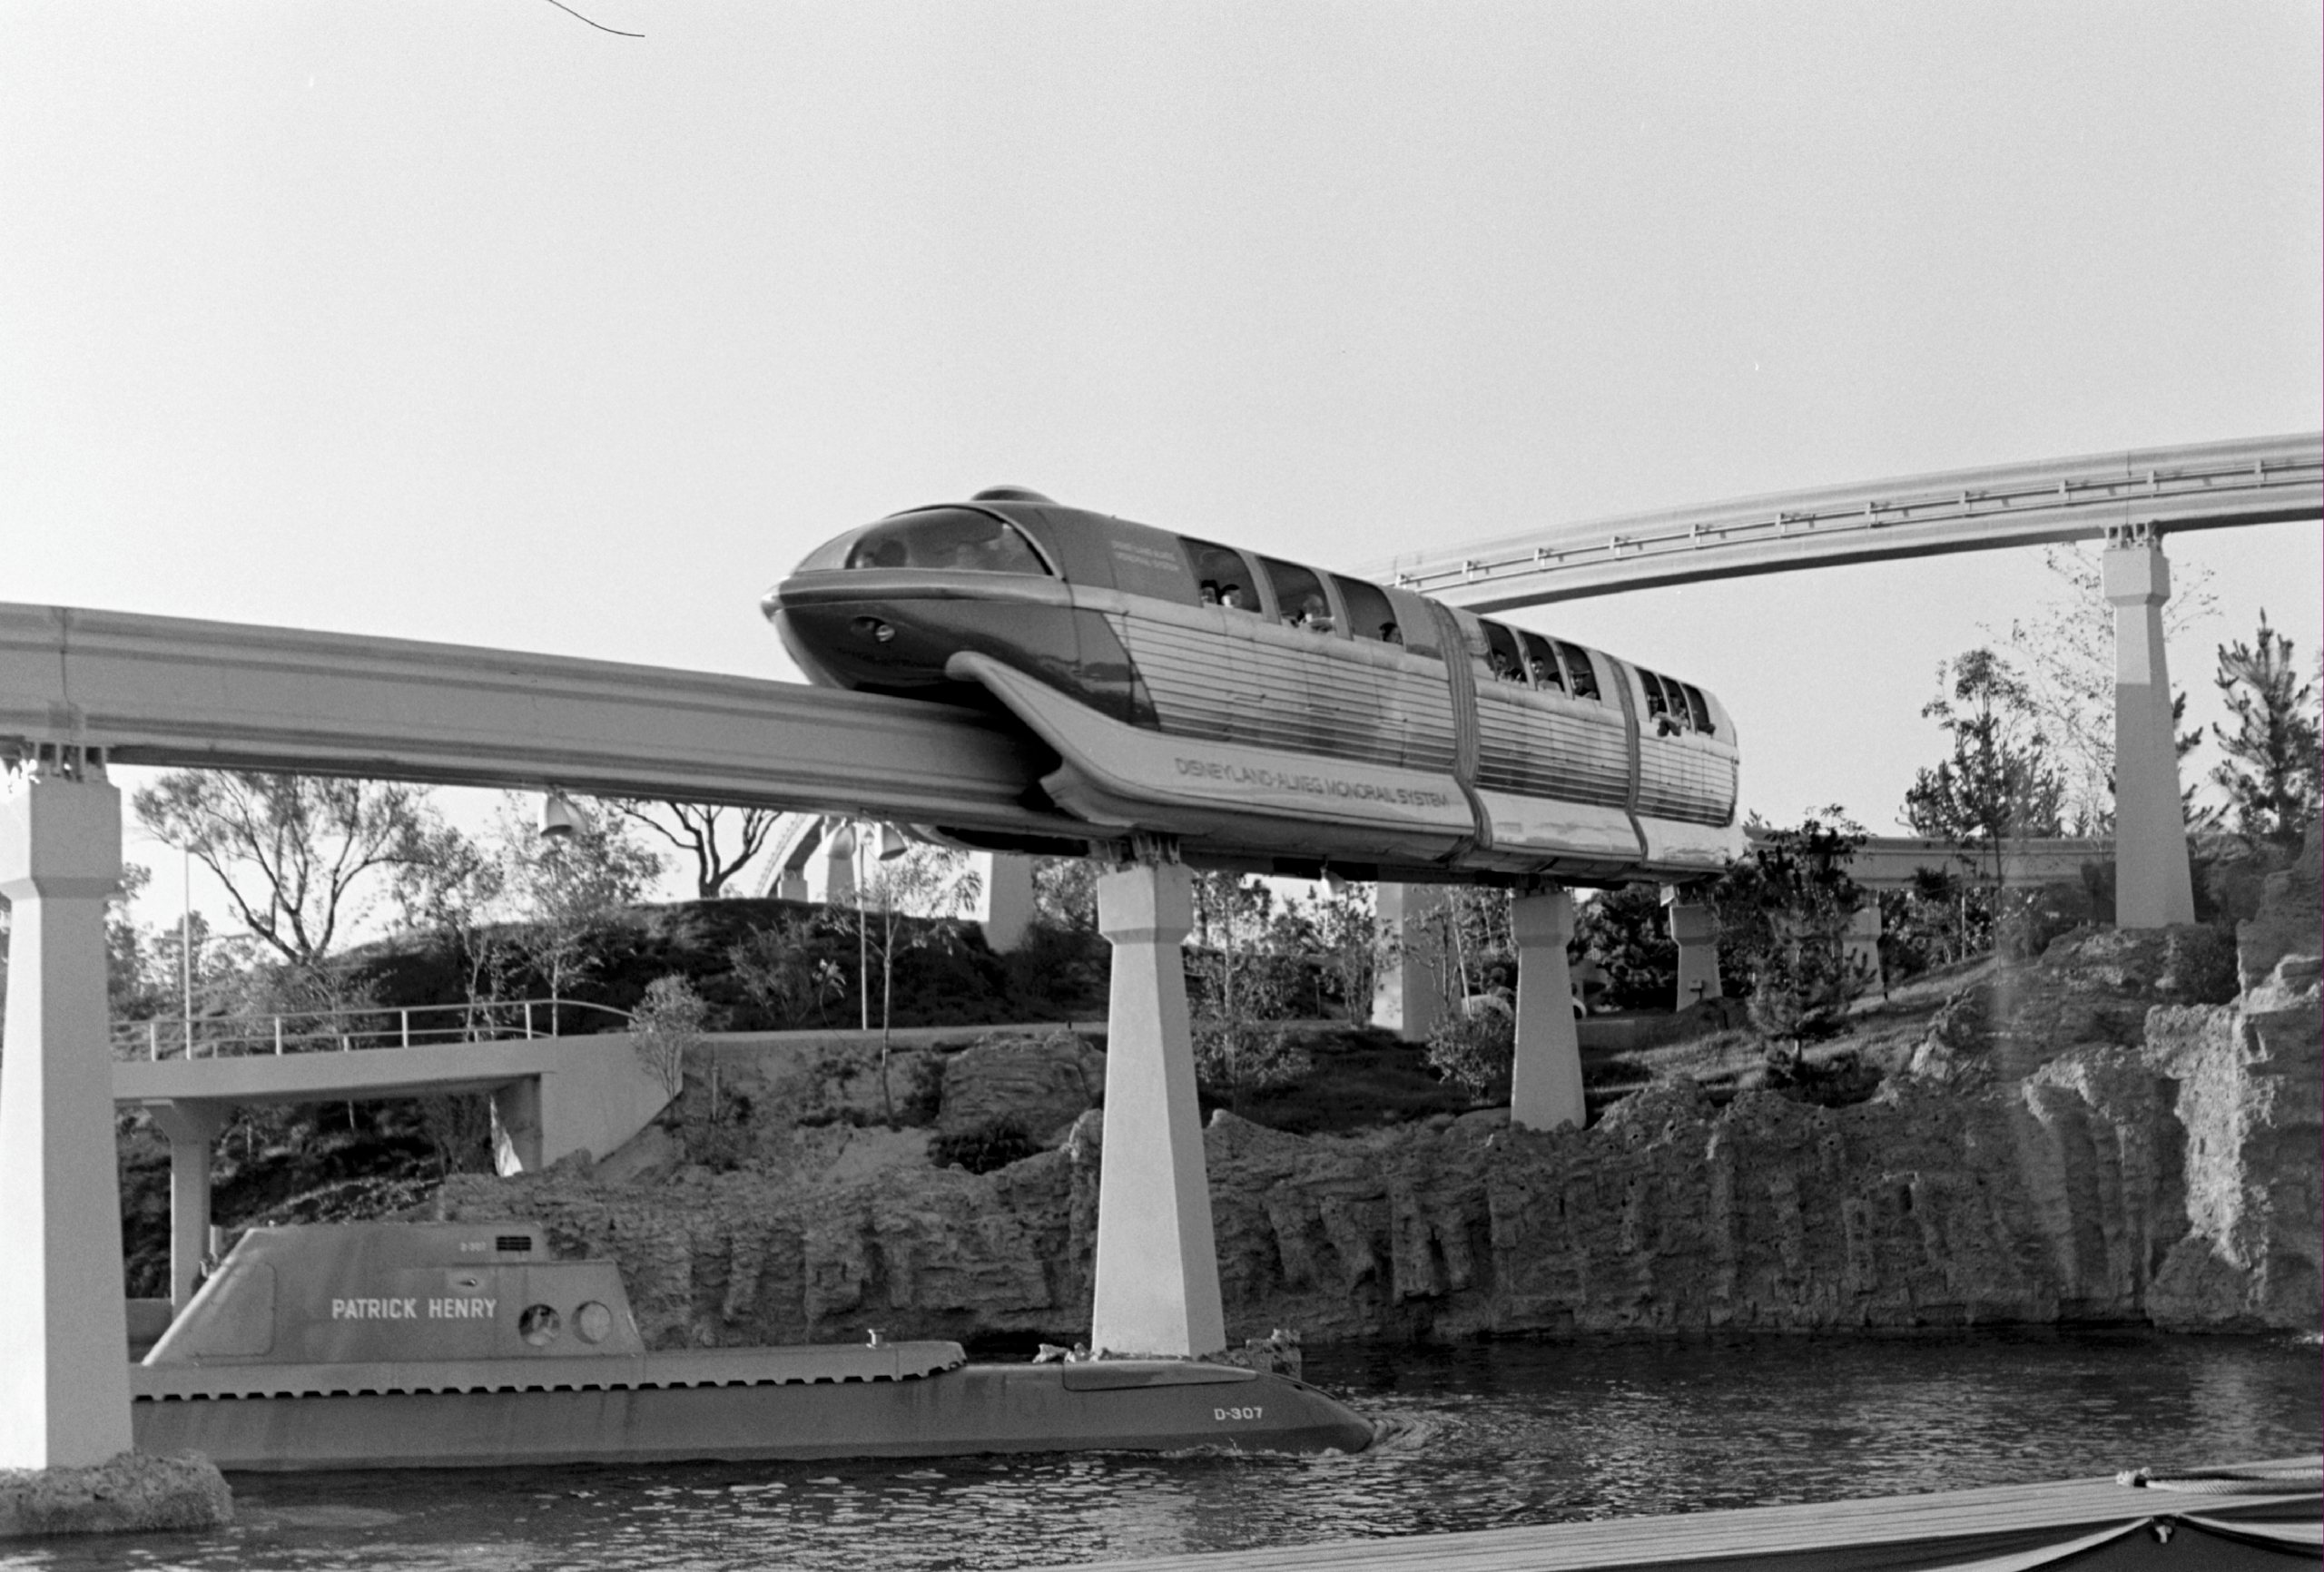 Monorail At Disneyland - 1959